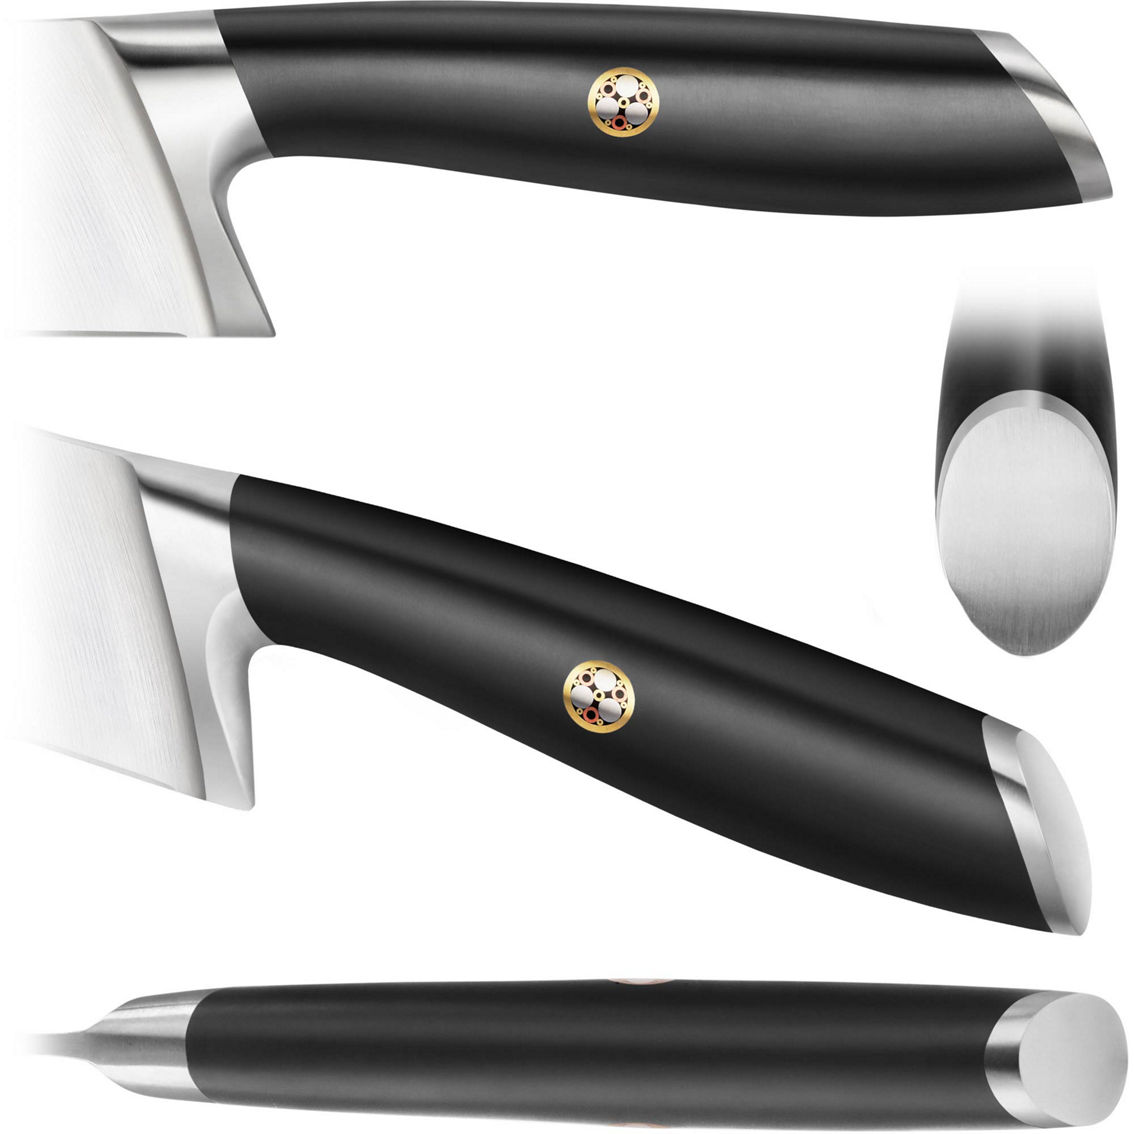 Cangshan Cutlery L Series Cleaver Knife Block 7 pc. Set, Black - Image 7 of 9